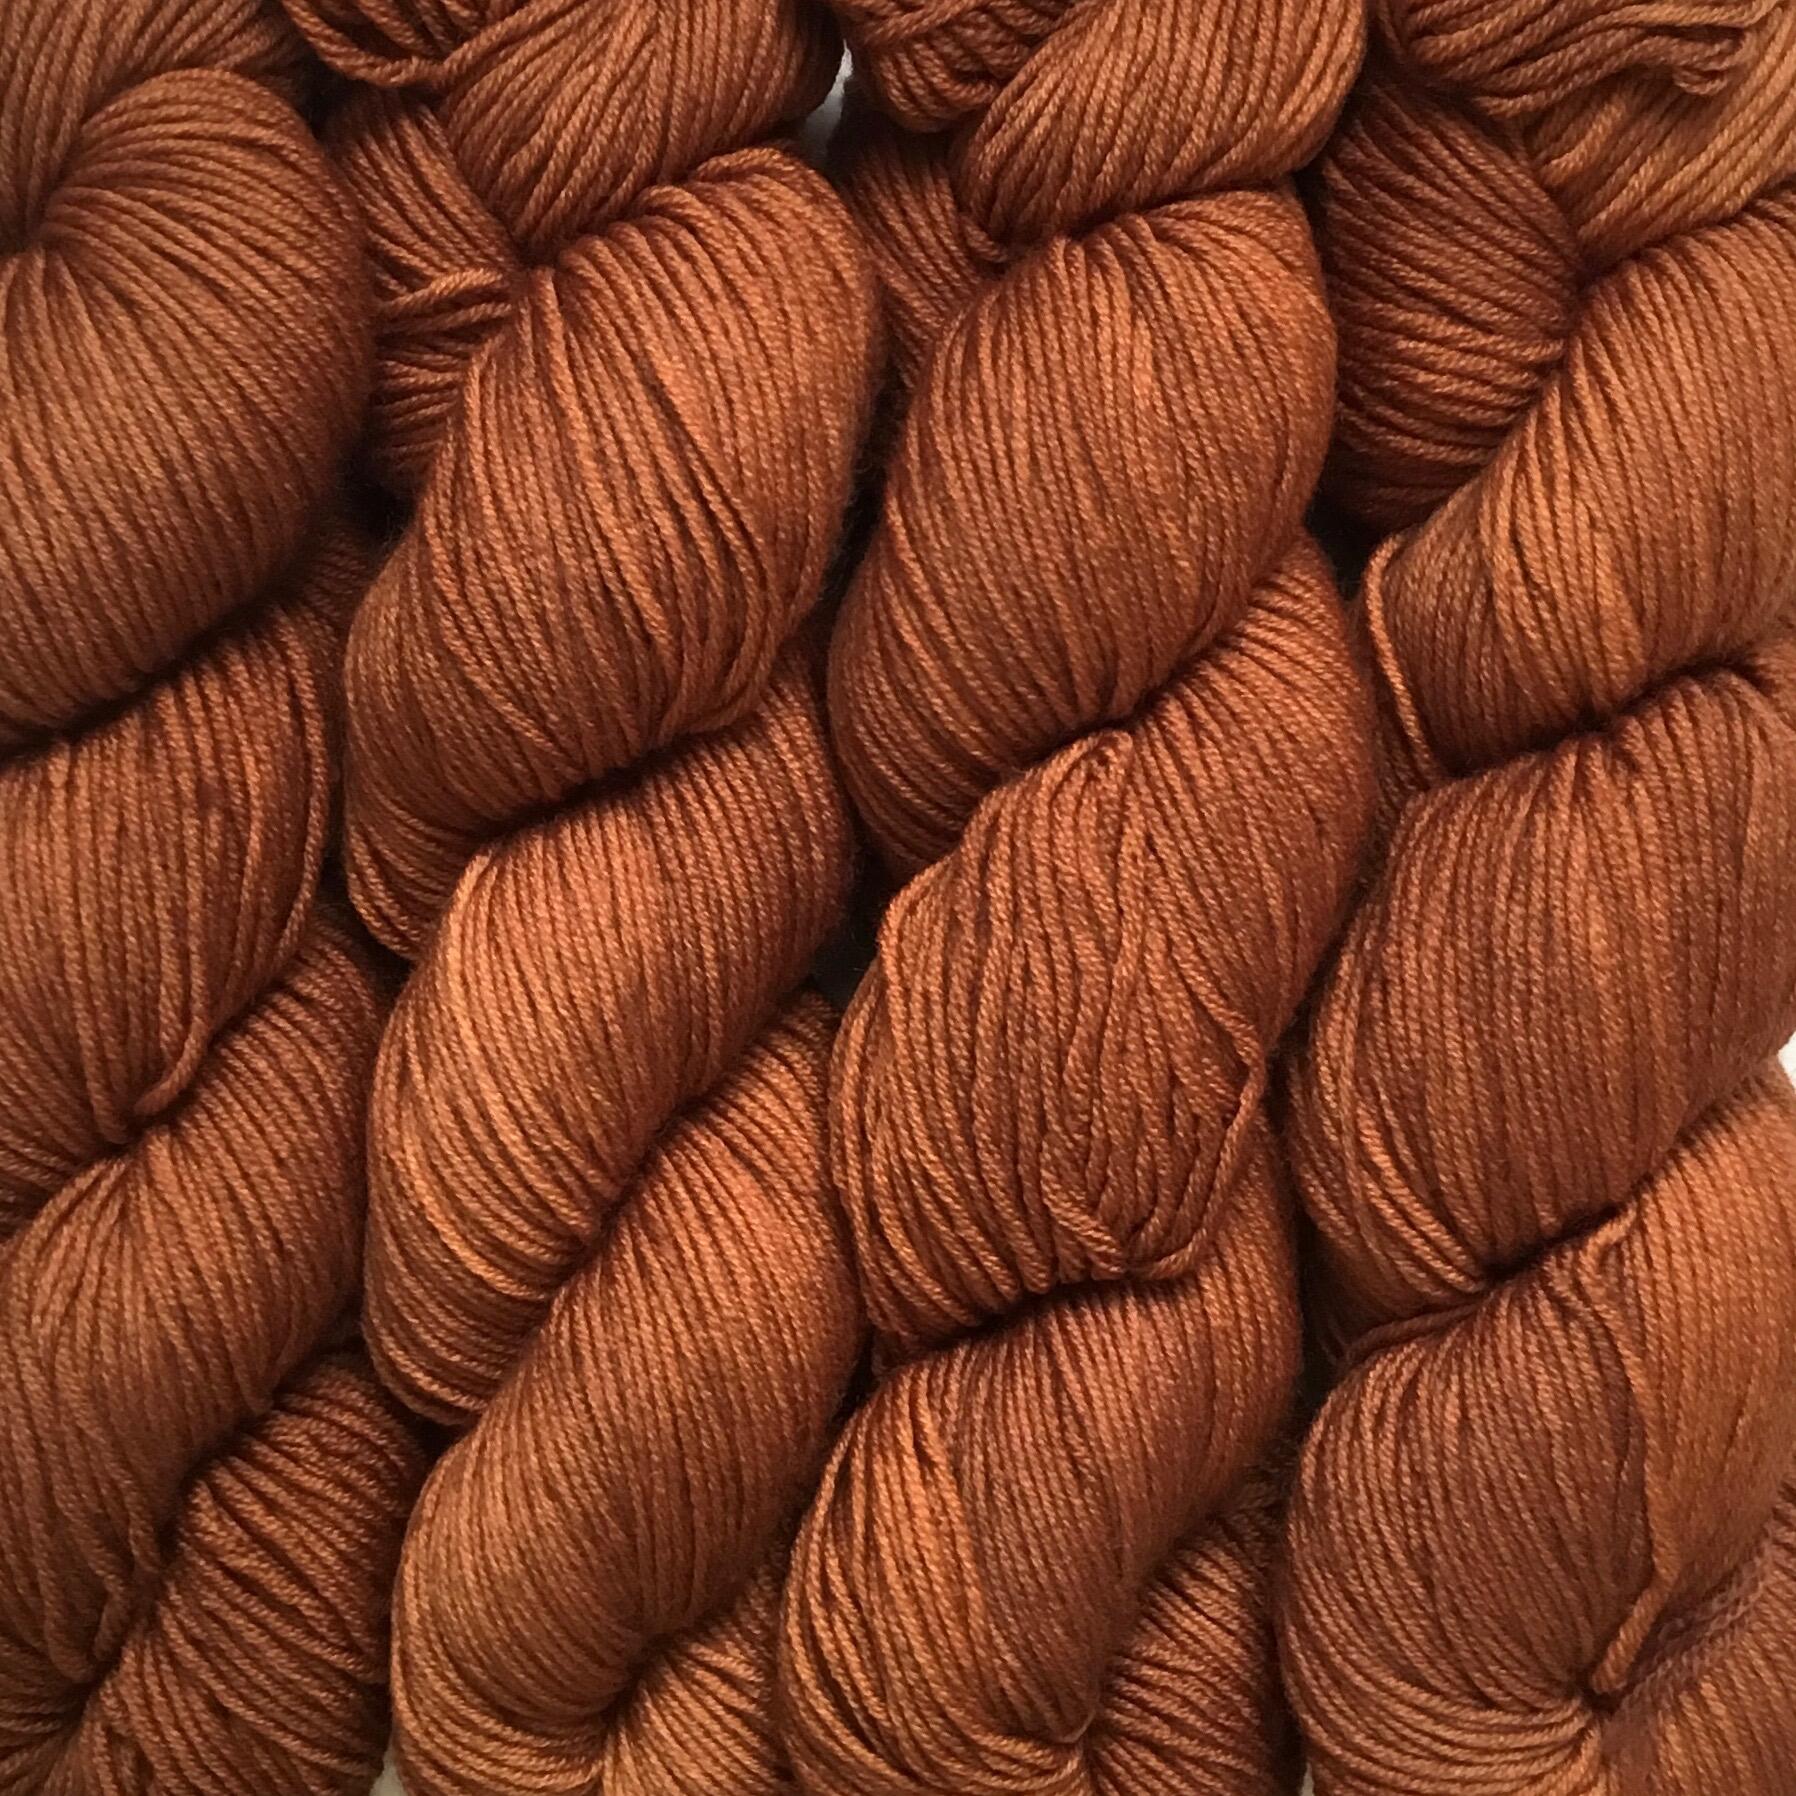 Hazelnut Ready to Ship Hand Dyed Yarn Worsted Brown Yarn Superwash